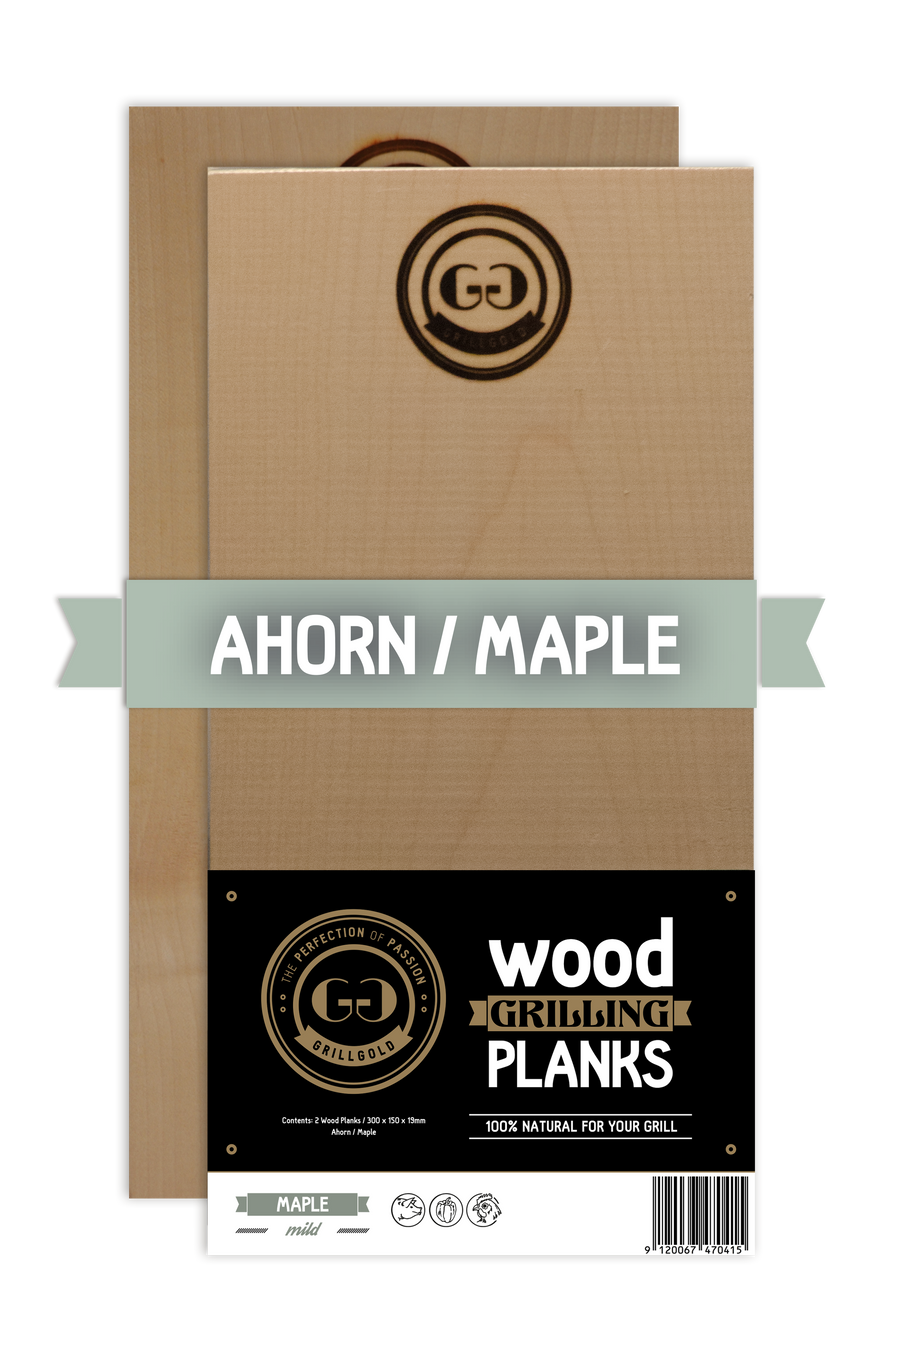 Wood Grilling Planks Acero